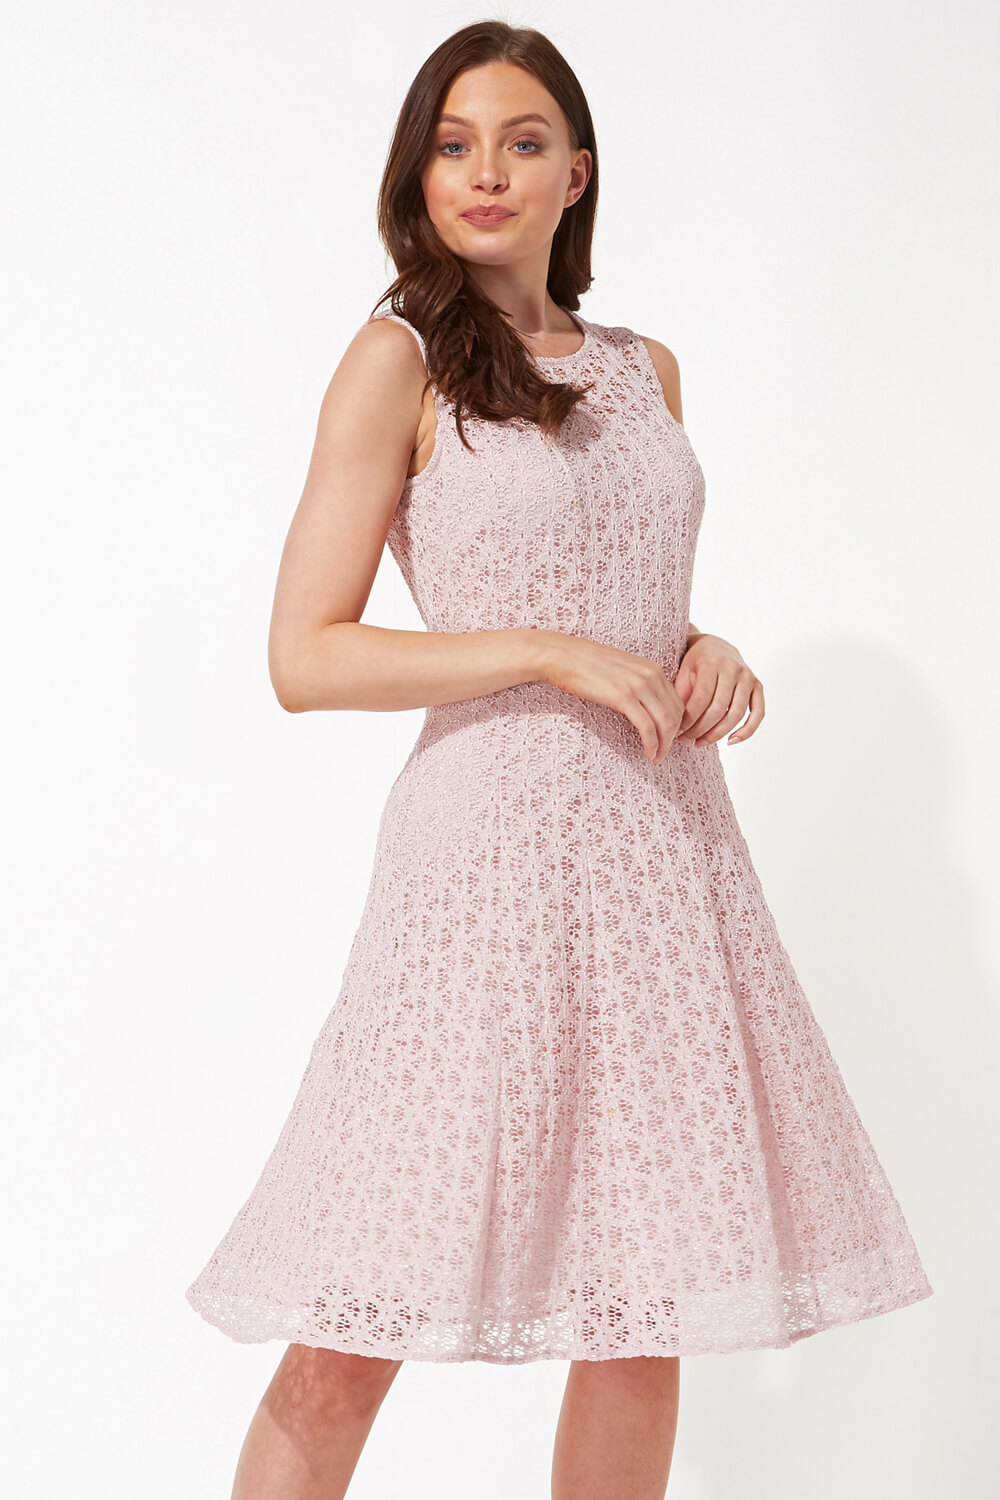 roman pink dress